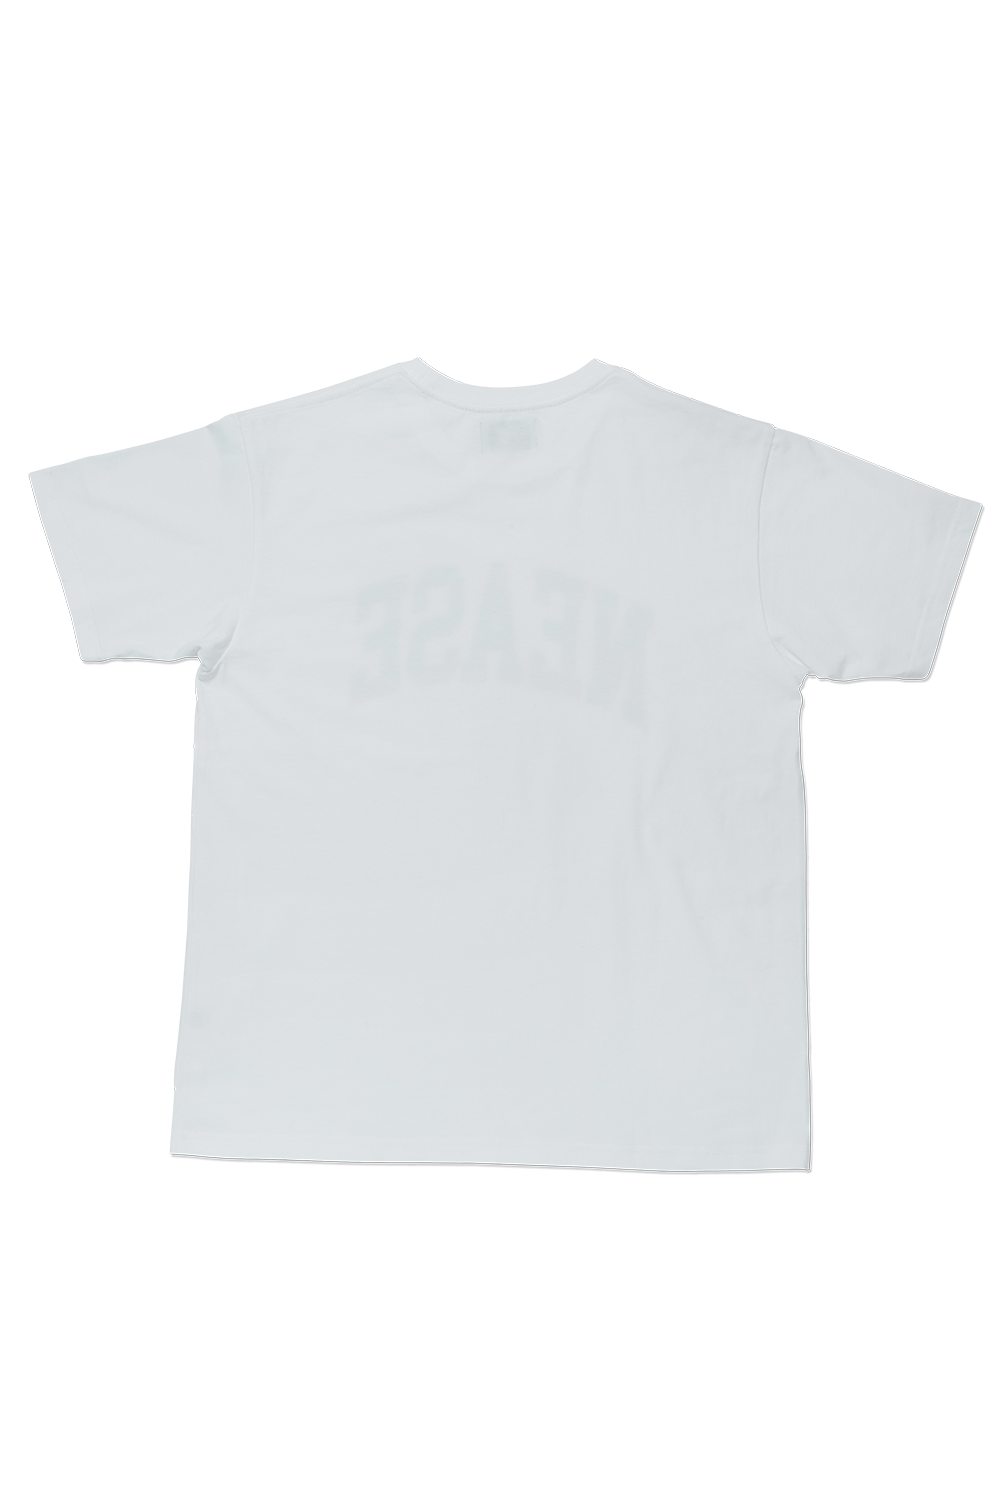 NEASE college logo t-shirt (white)